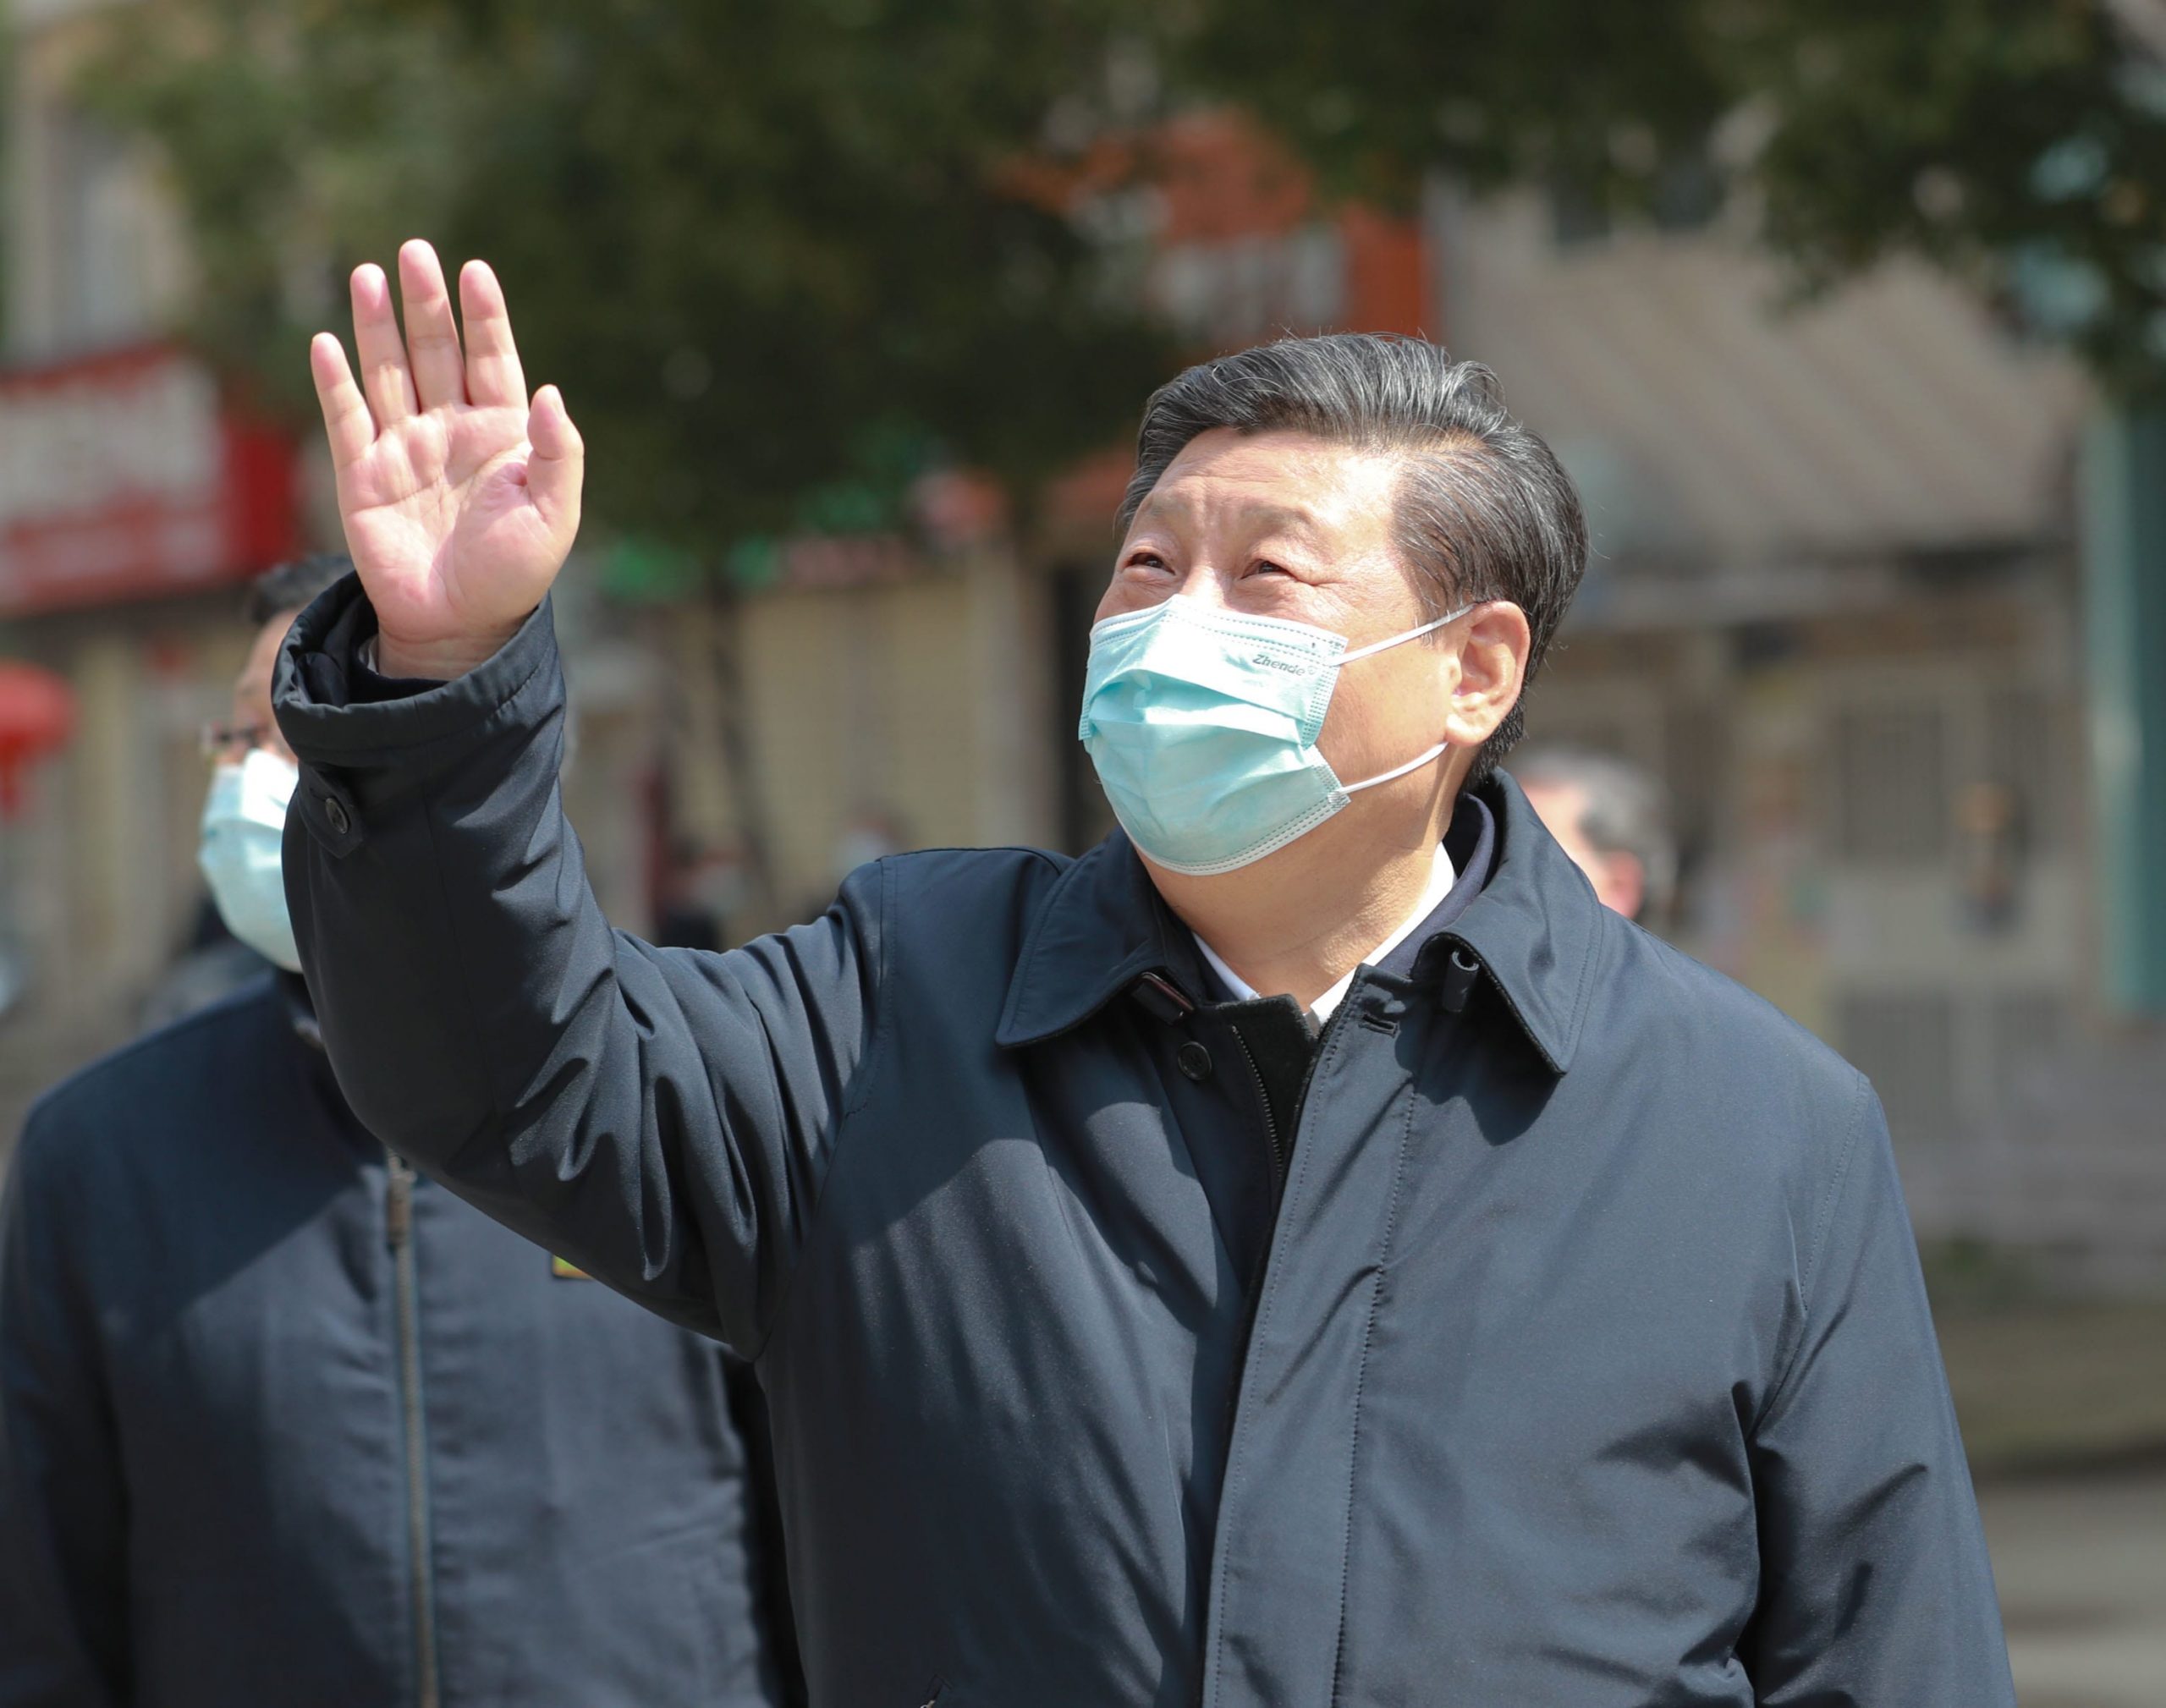 Pew survey on detrimental sentiment towards China, Xi Jinping, coronavirus